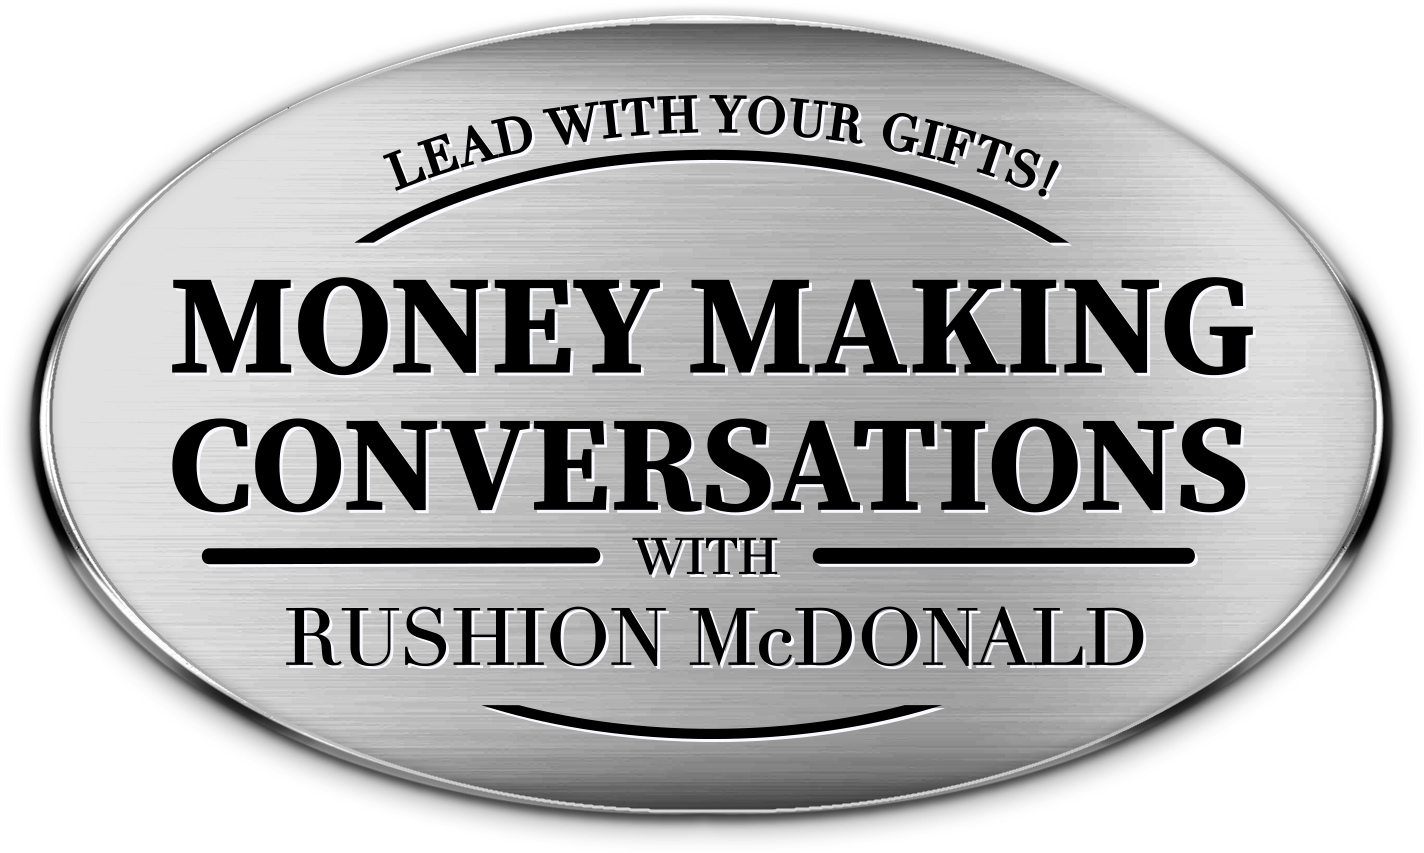 mmc new logo - money making conversations